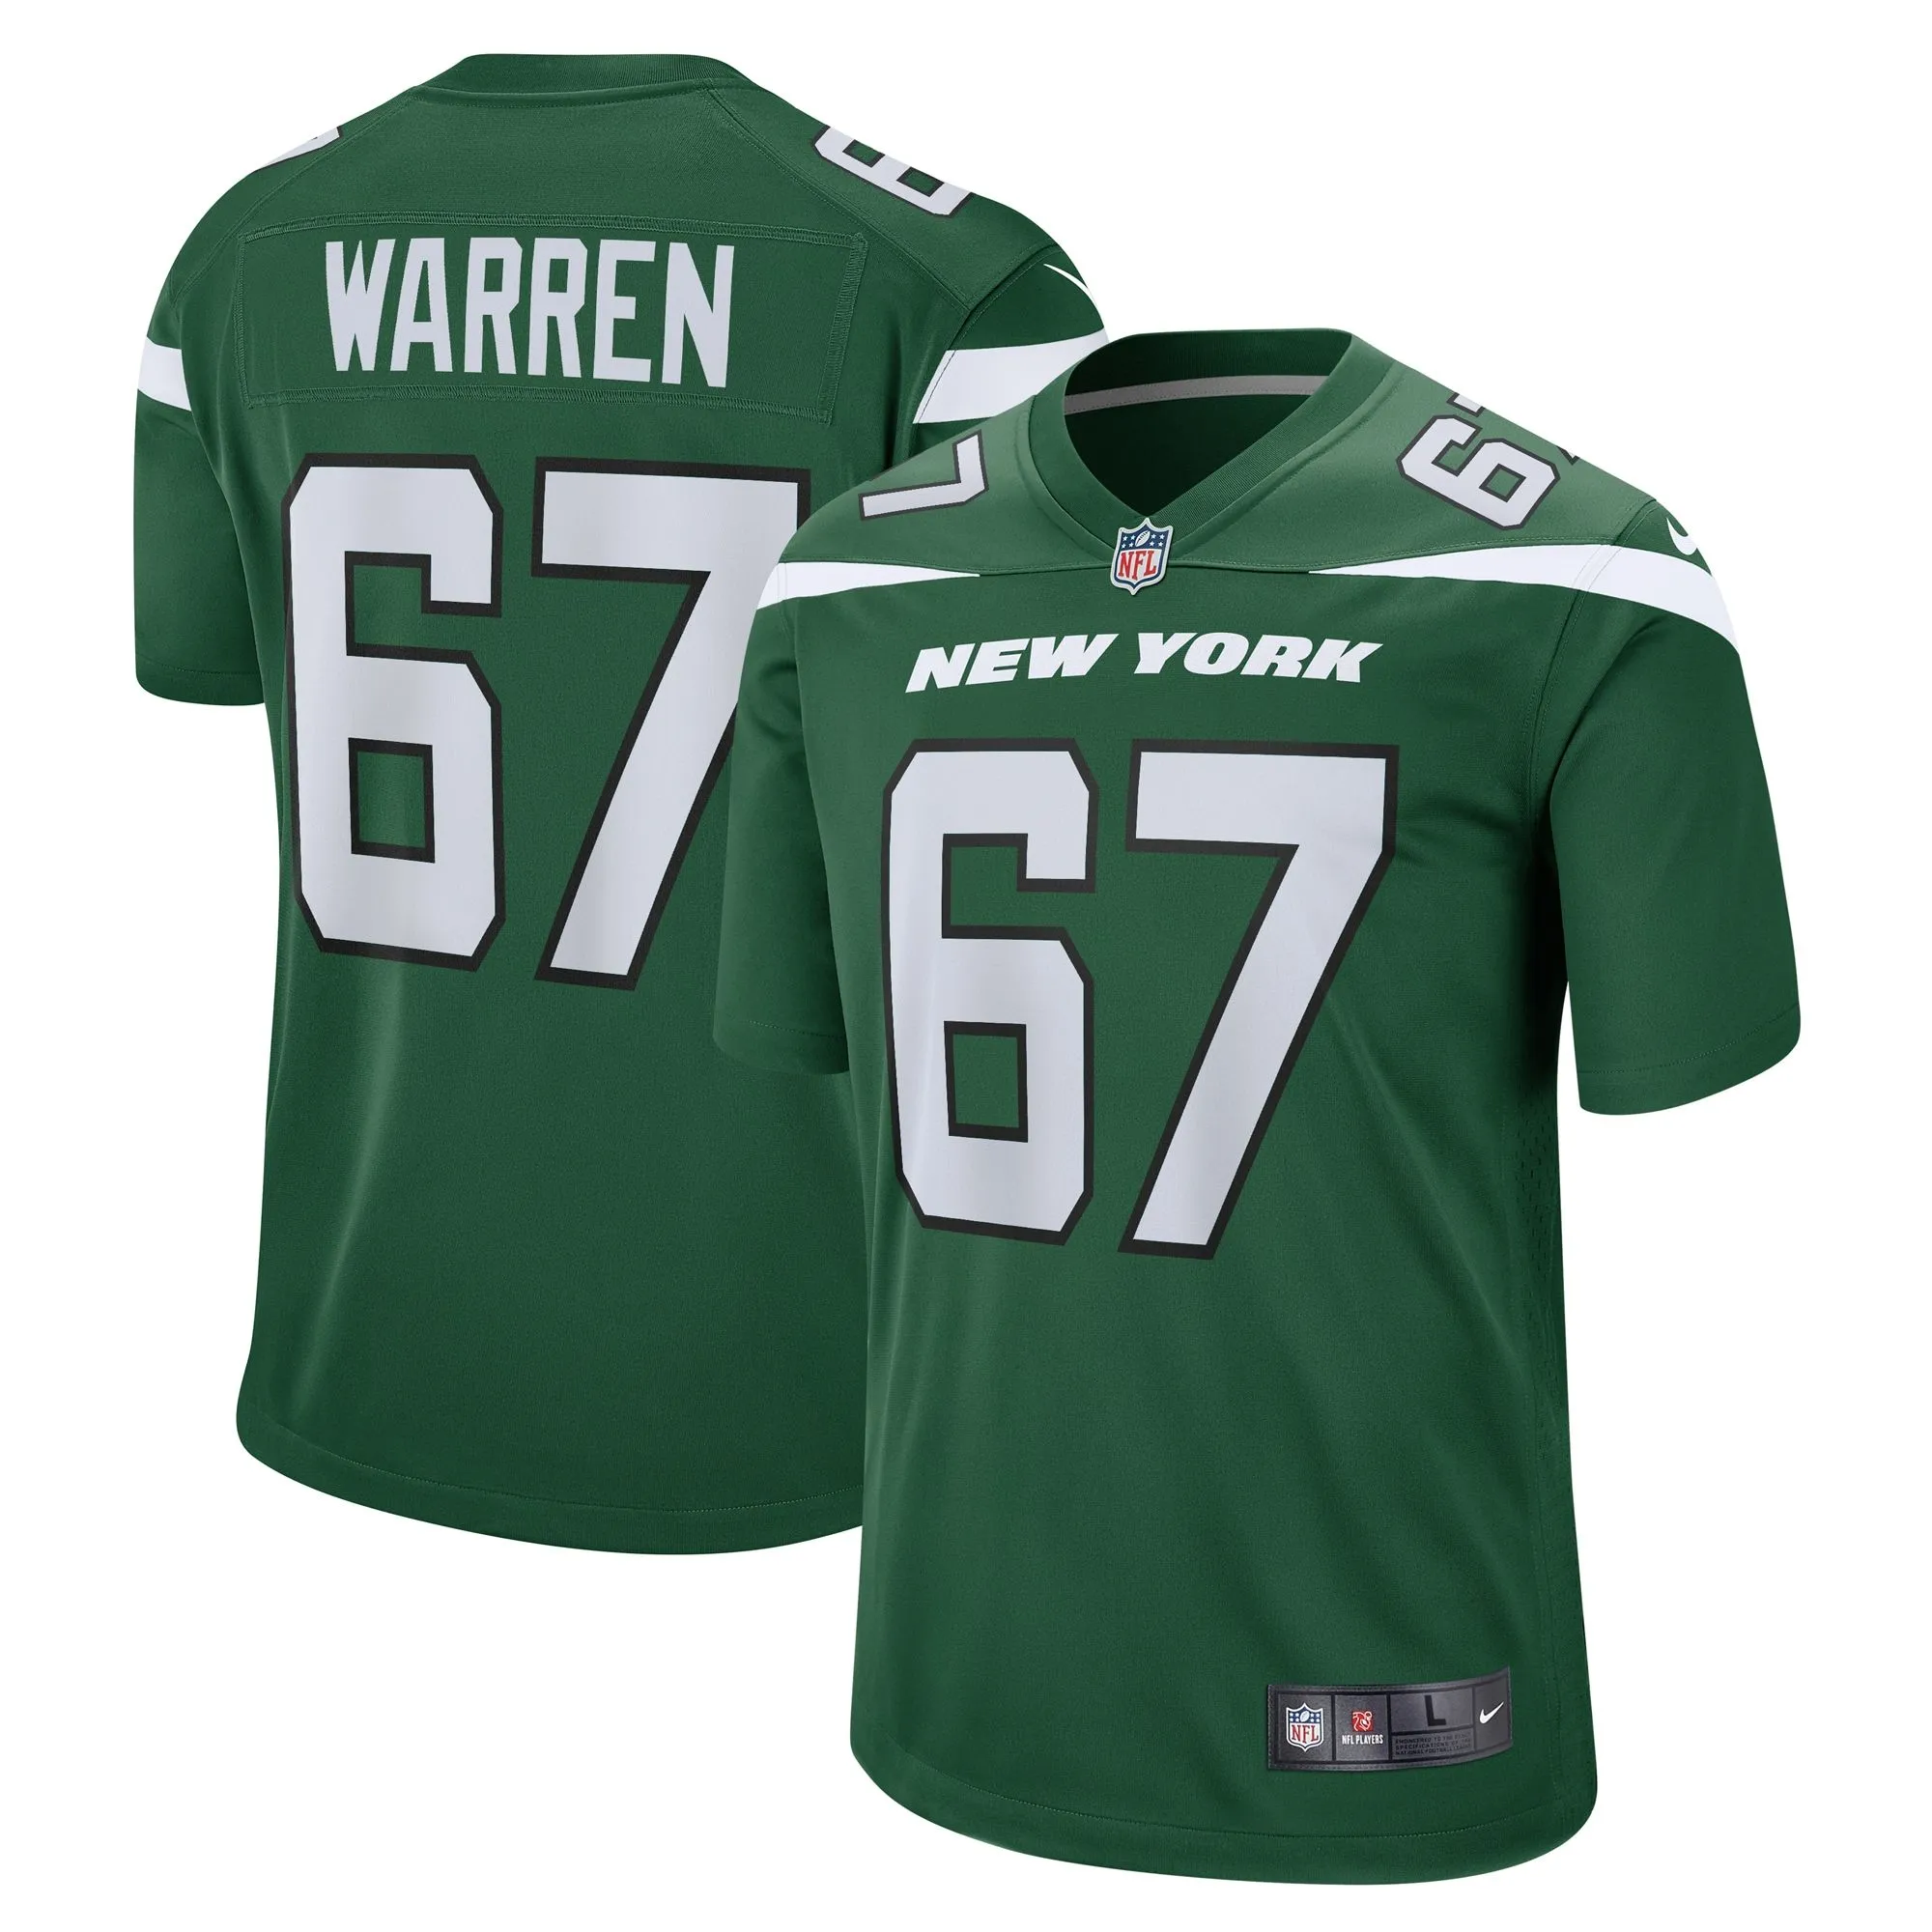 Carter Warren New York Jets   Game Jersey - Gotham Green